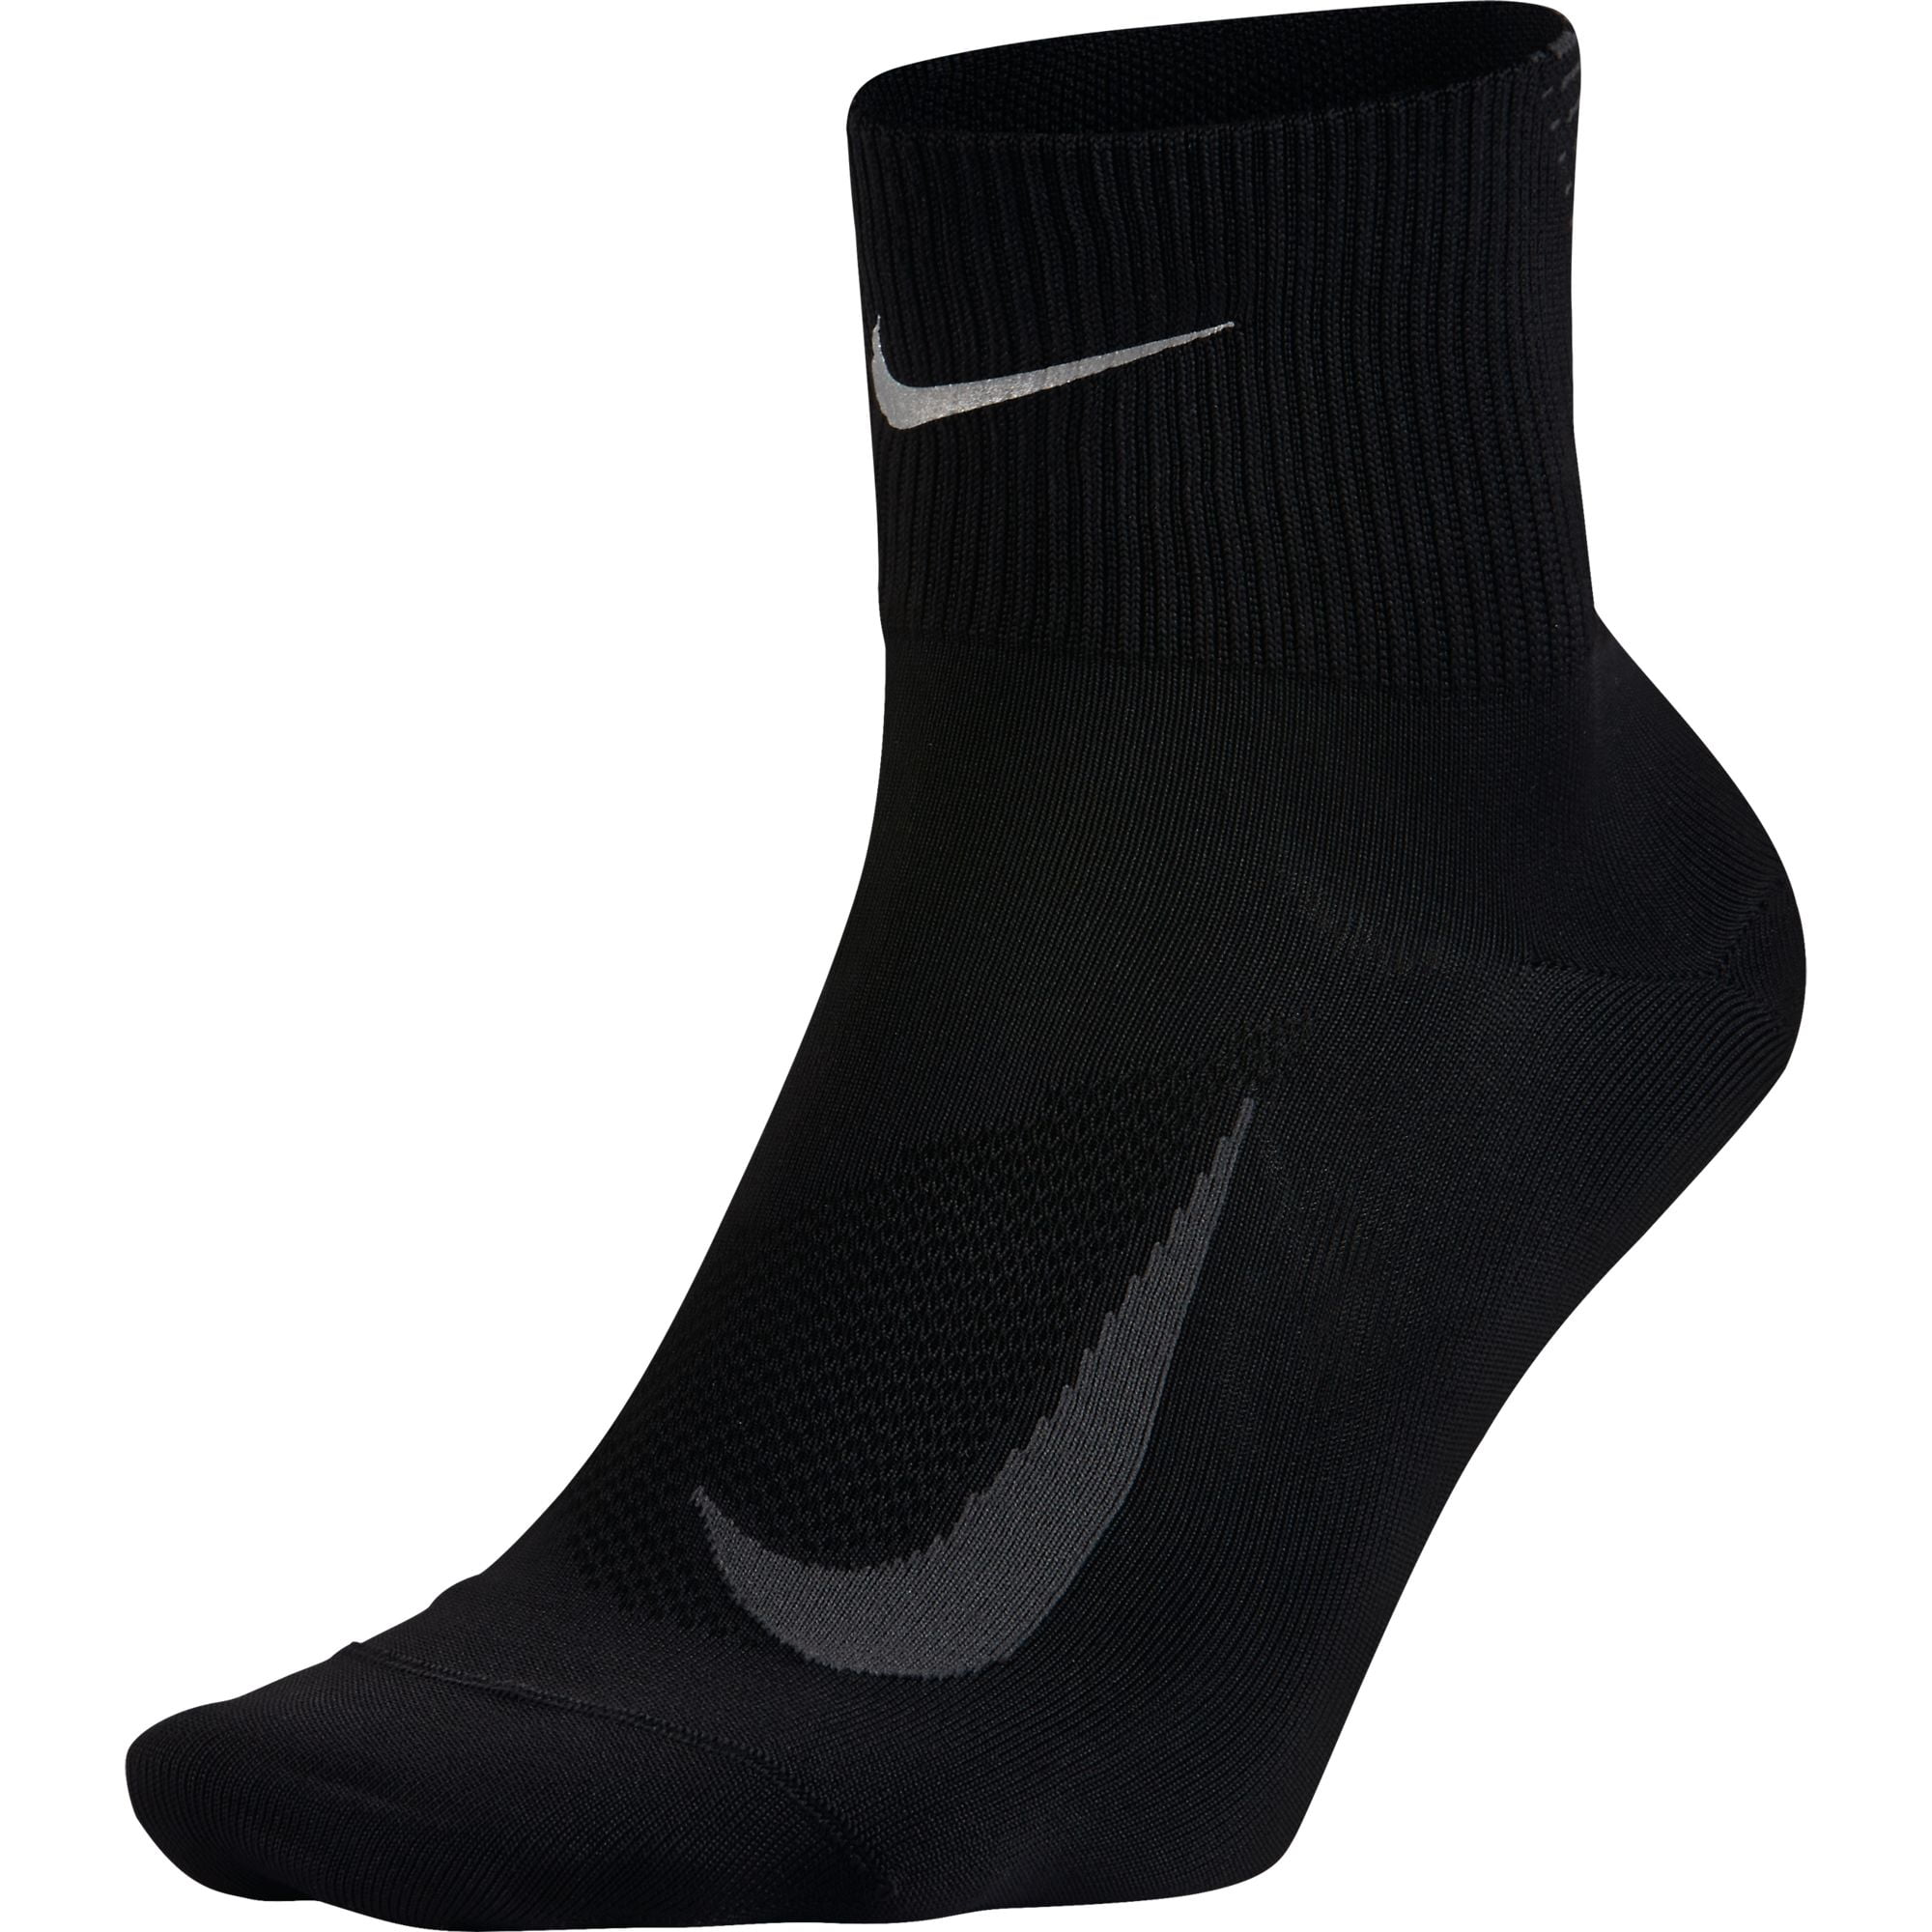 Buena voluntad mensaje inalámbrico Nike Elite Lightweight 2.0 Quarter Men's Running Socks Black sx5194-010 -  Walmart.com